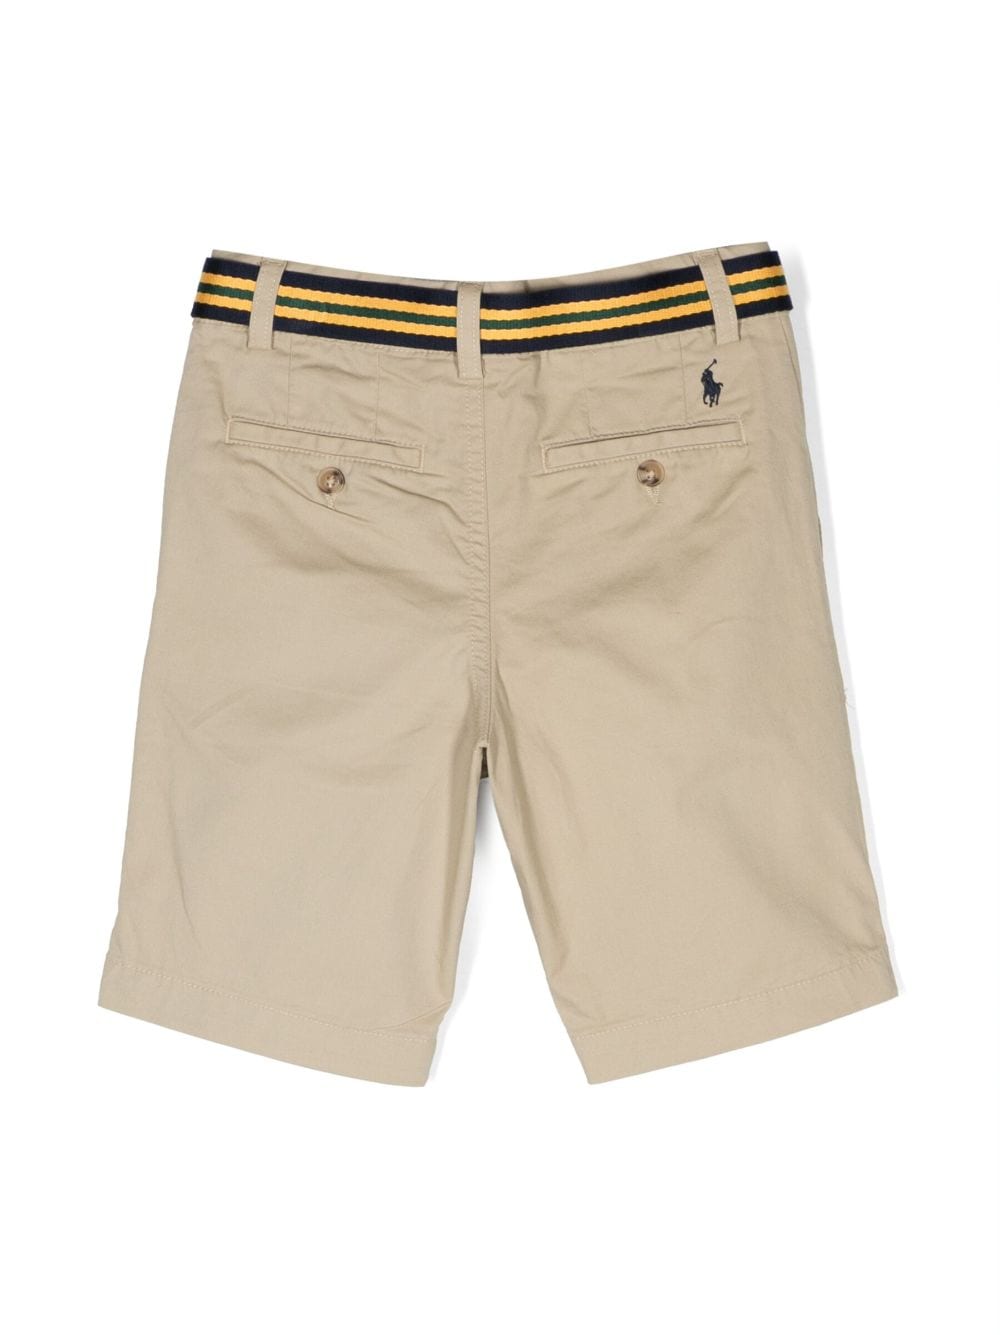 Beige Bermuda shorts for boys with logo